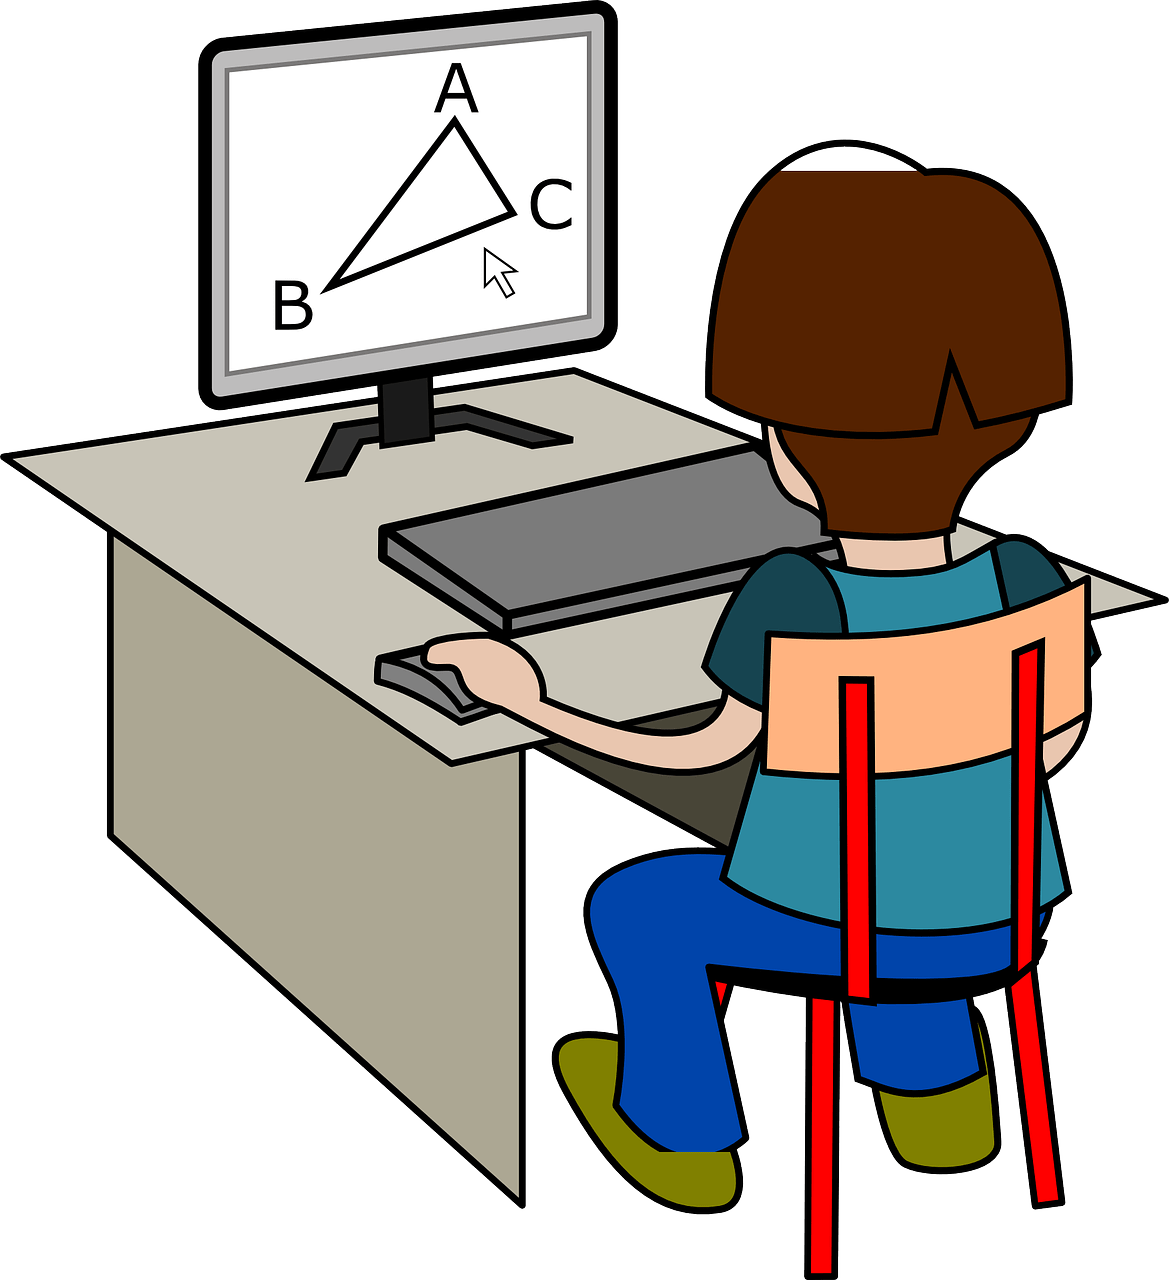 Testing animation. Компьютер иллюстрация. Компьютер рисунок. Ребенок за компьютером для детей. Компьютер мультяшный.